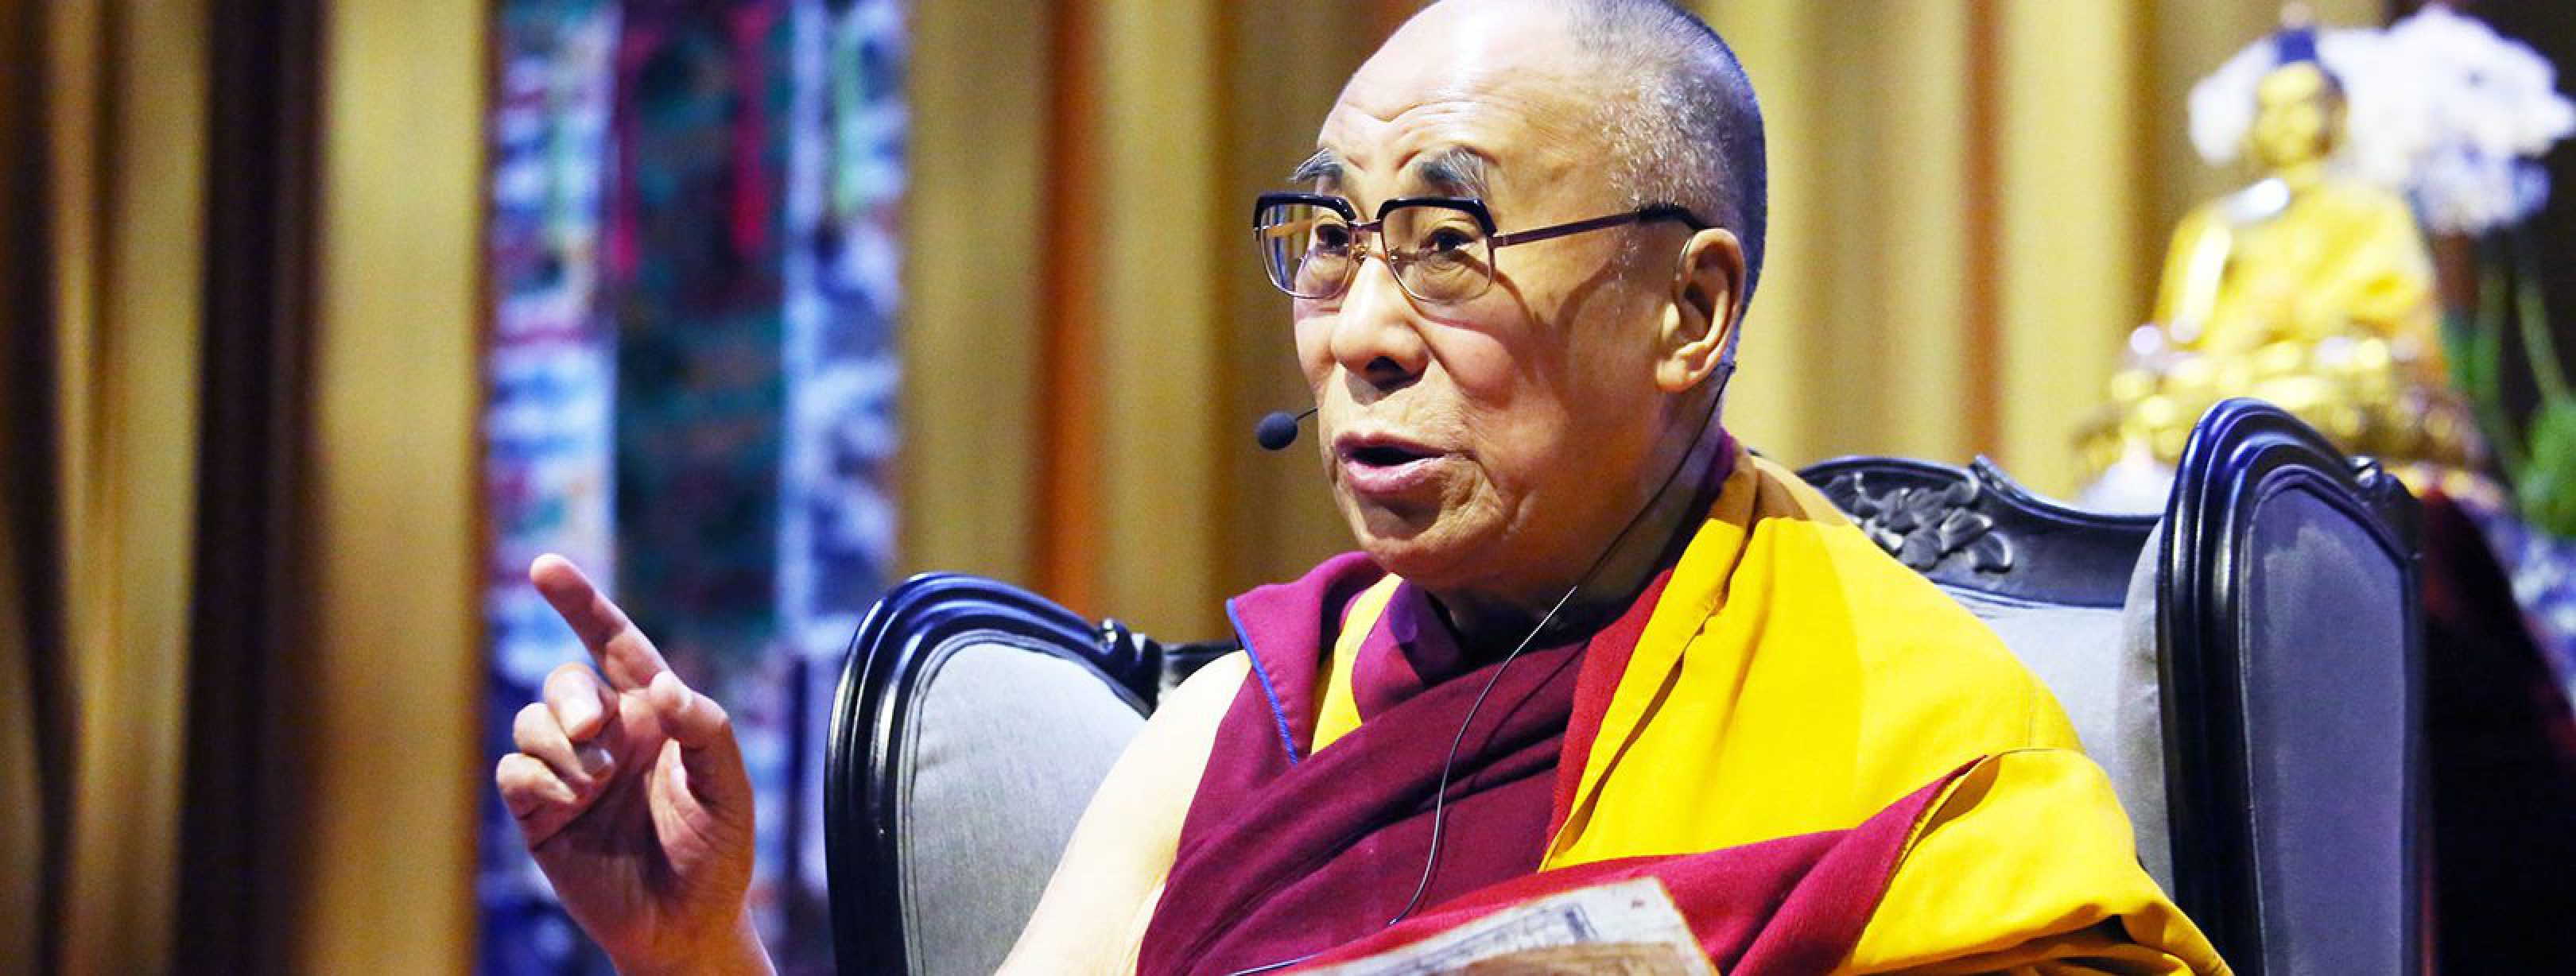 7 vragen dalai lama